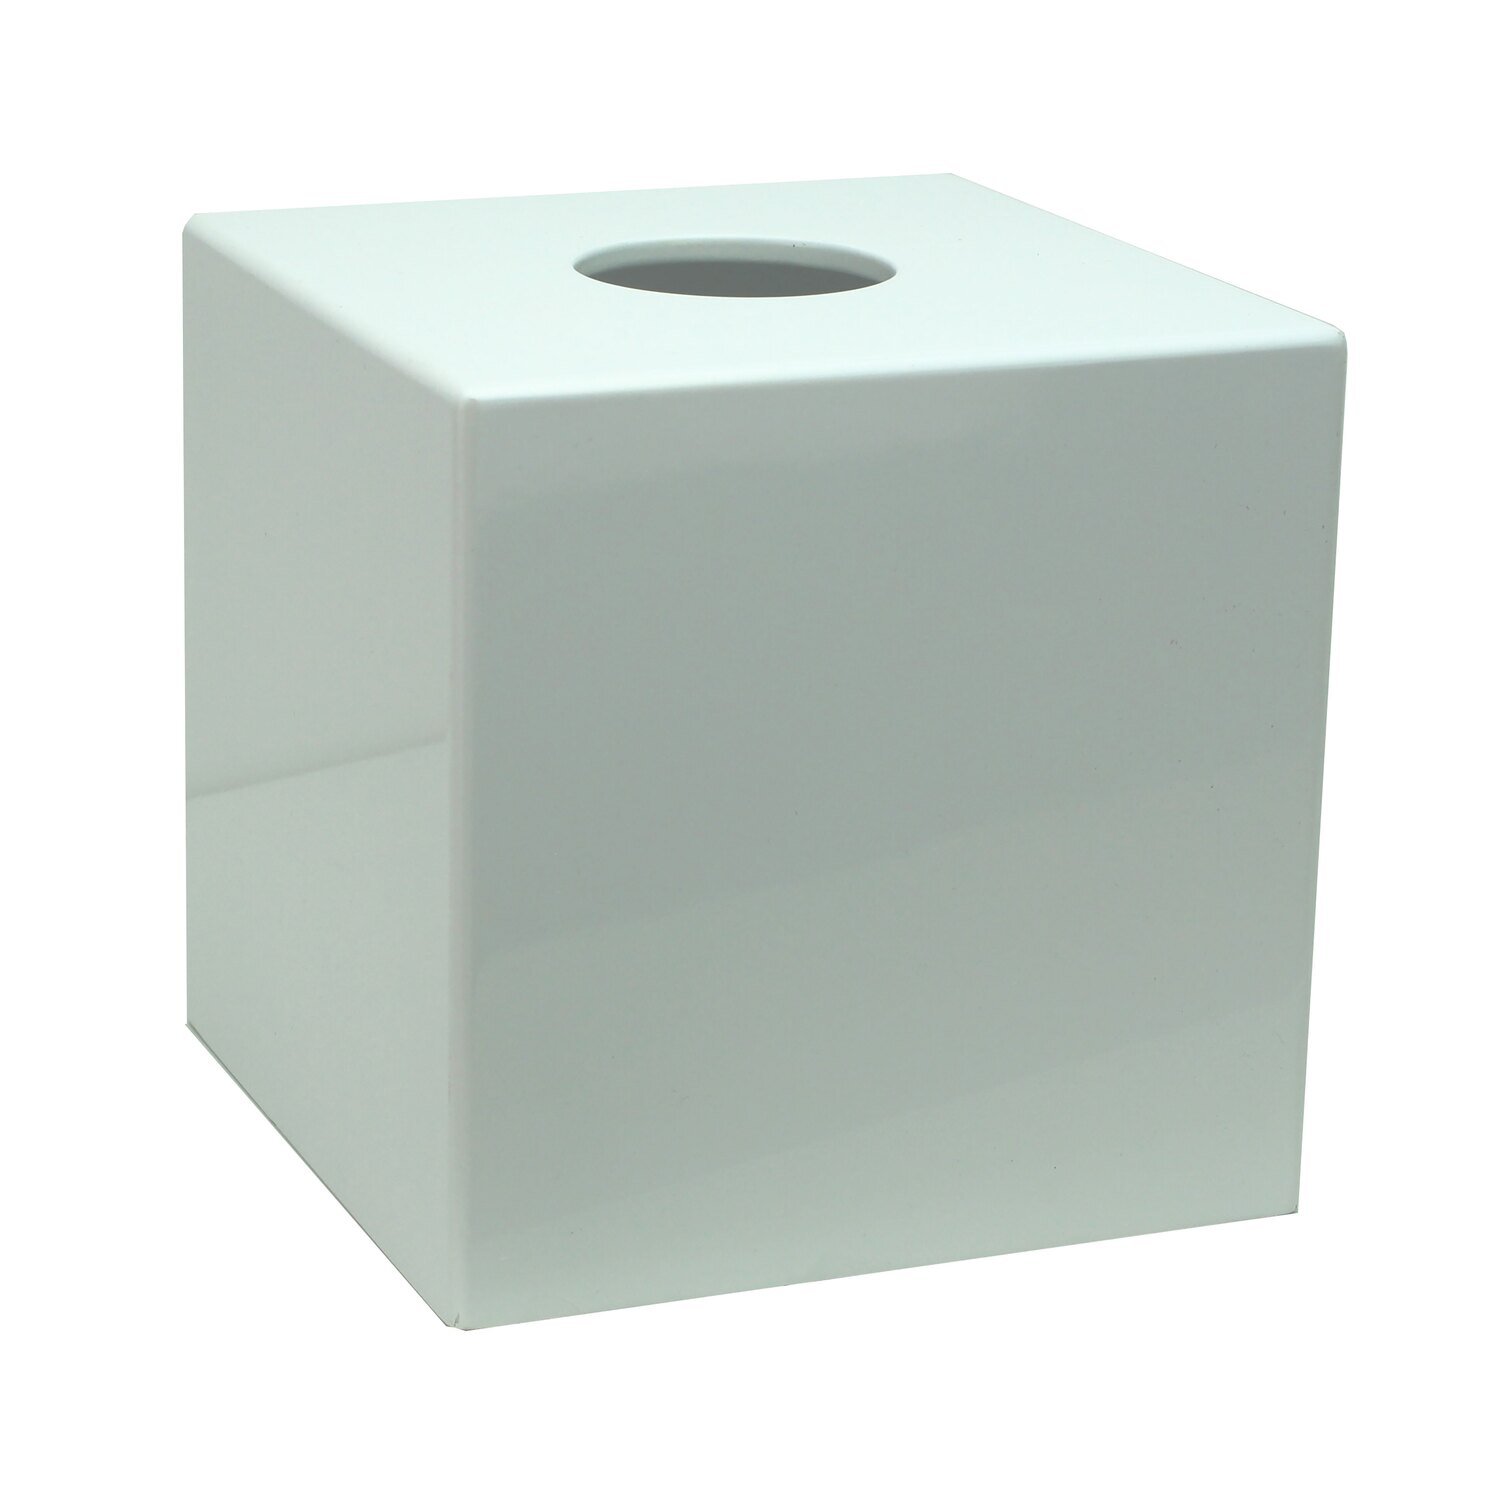 Addison Ross Tissue Box 5.5 x 5 Inch.5 White Lacquer TB1503